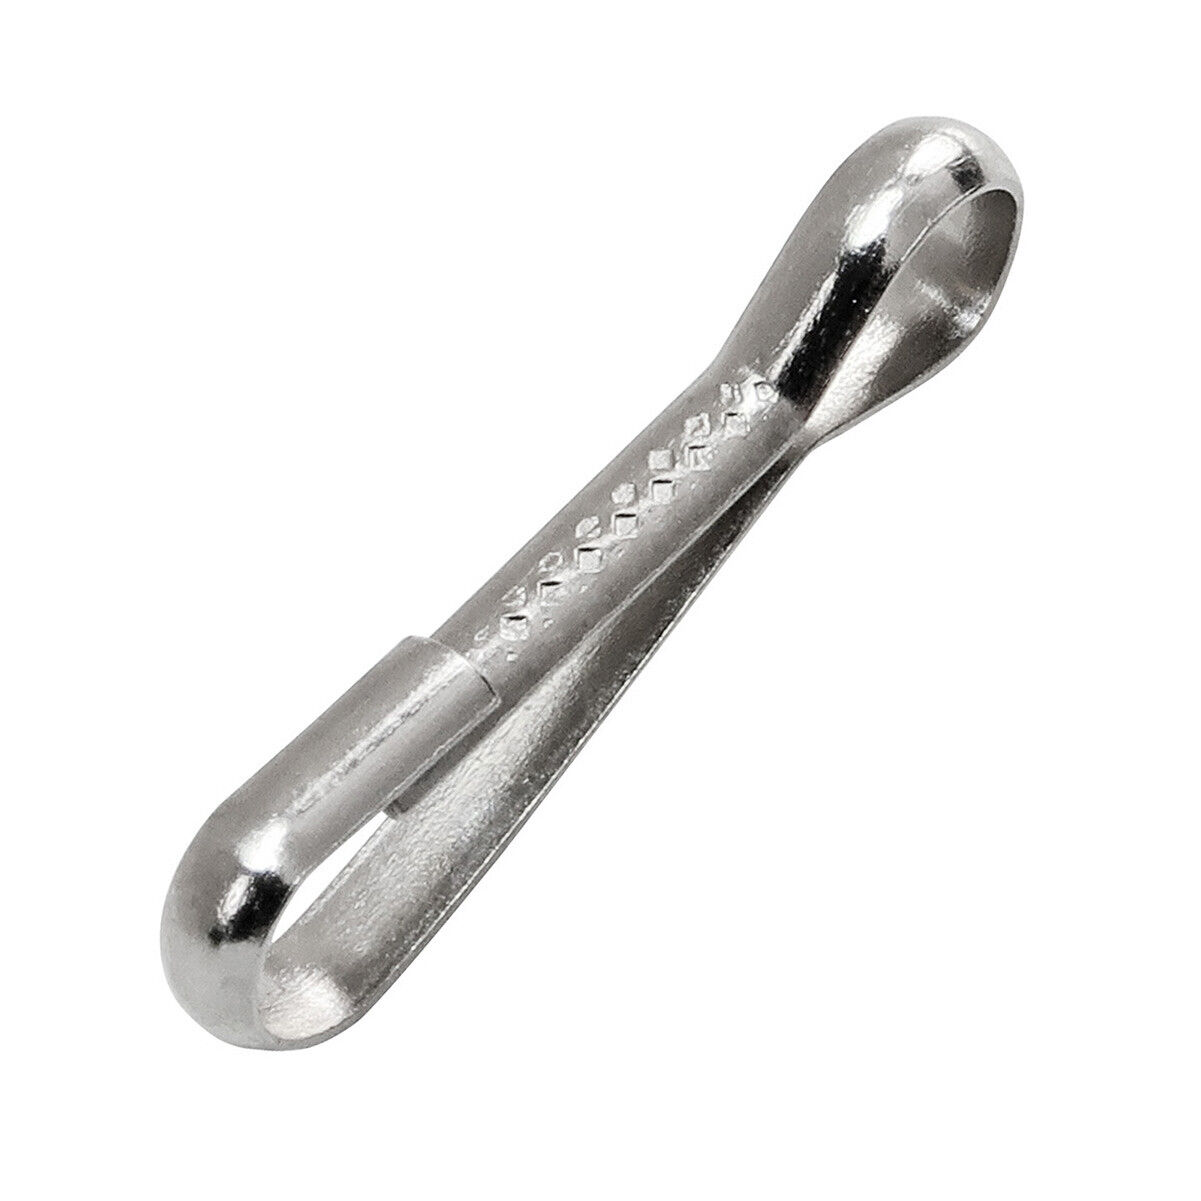 25 Small Metal J Hook Spring Clips for DIY Lanyards & Keychains - 1 1/4 Inch Specialist ID 7743-1020 - фотография #5